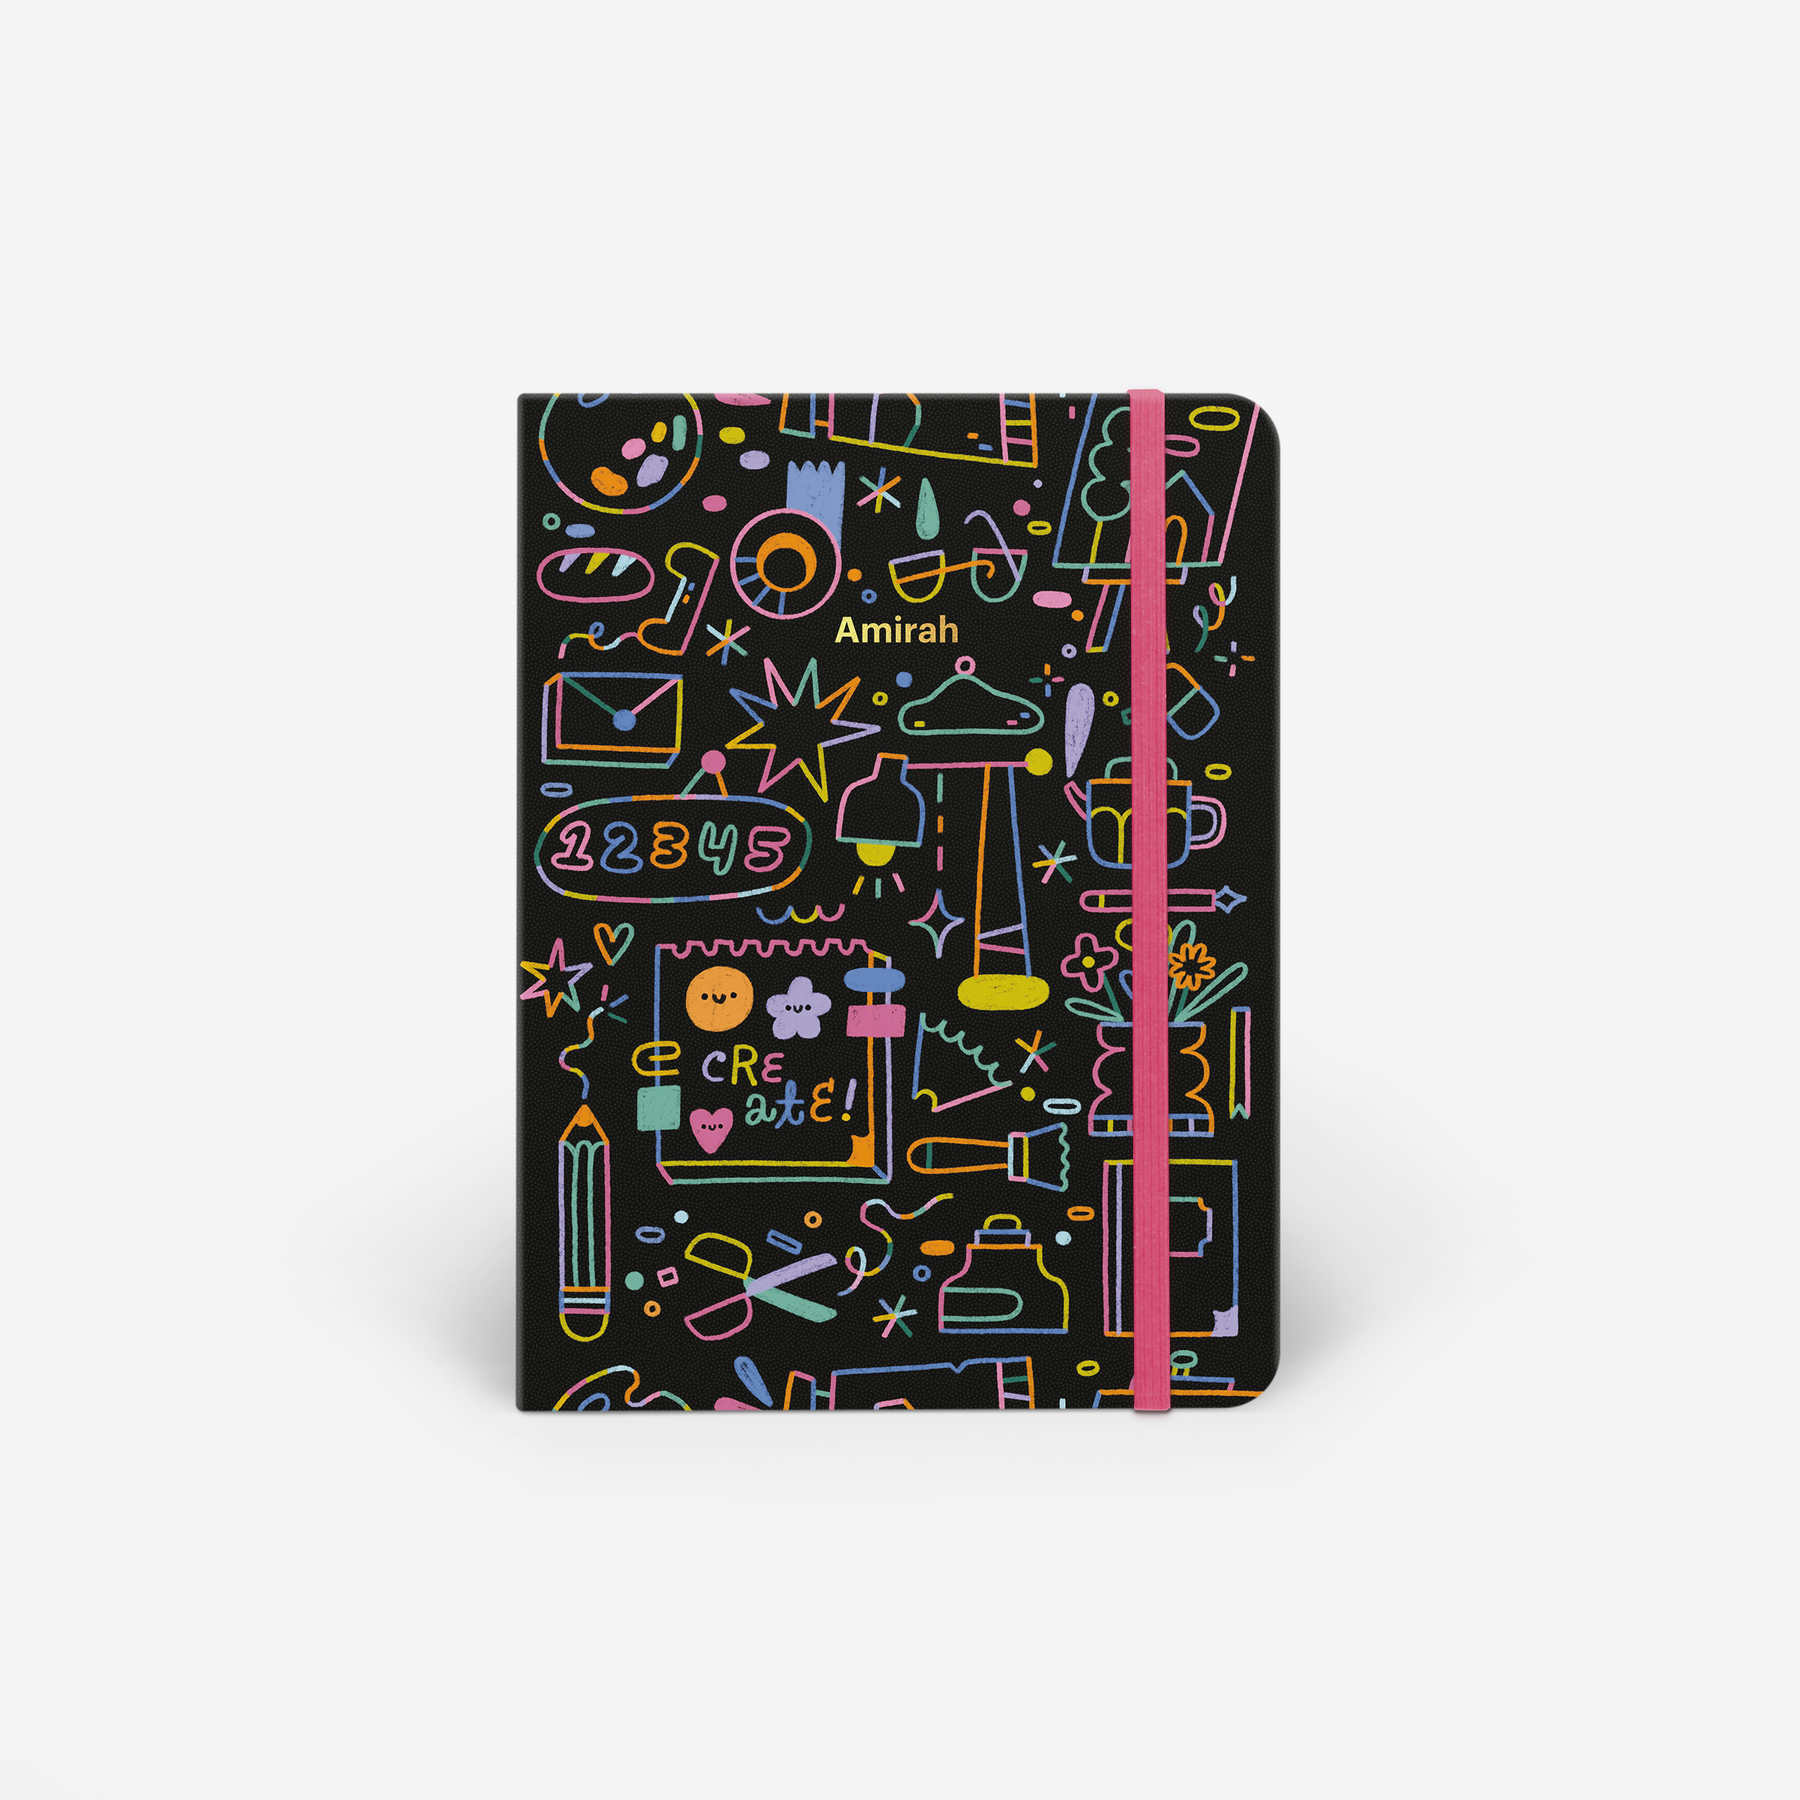 Creative Space Twinbook